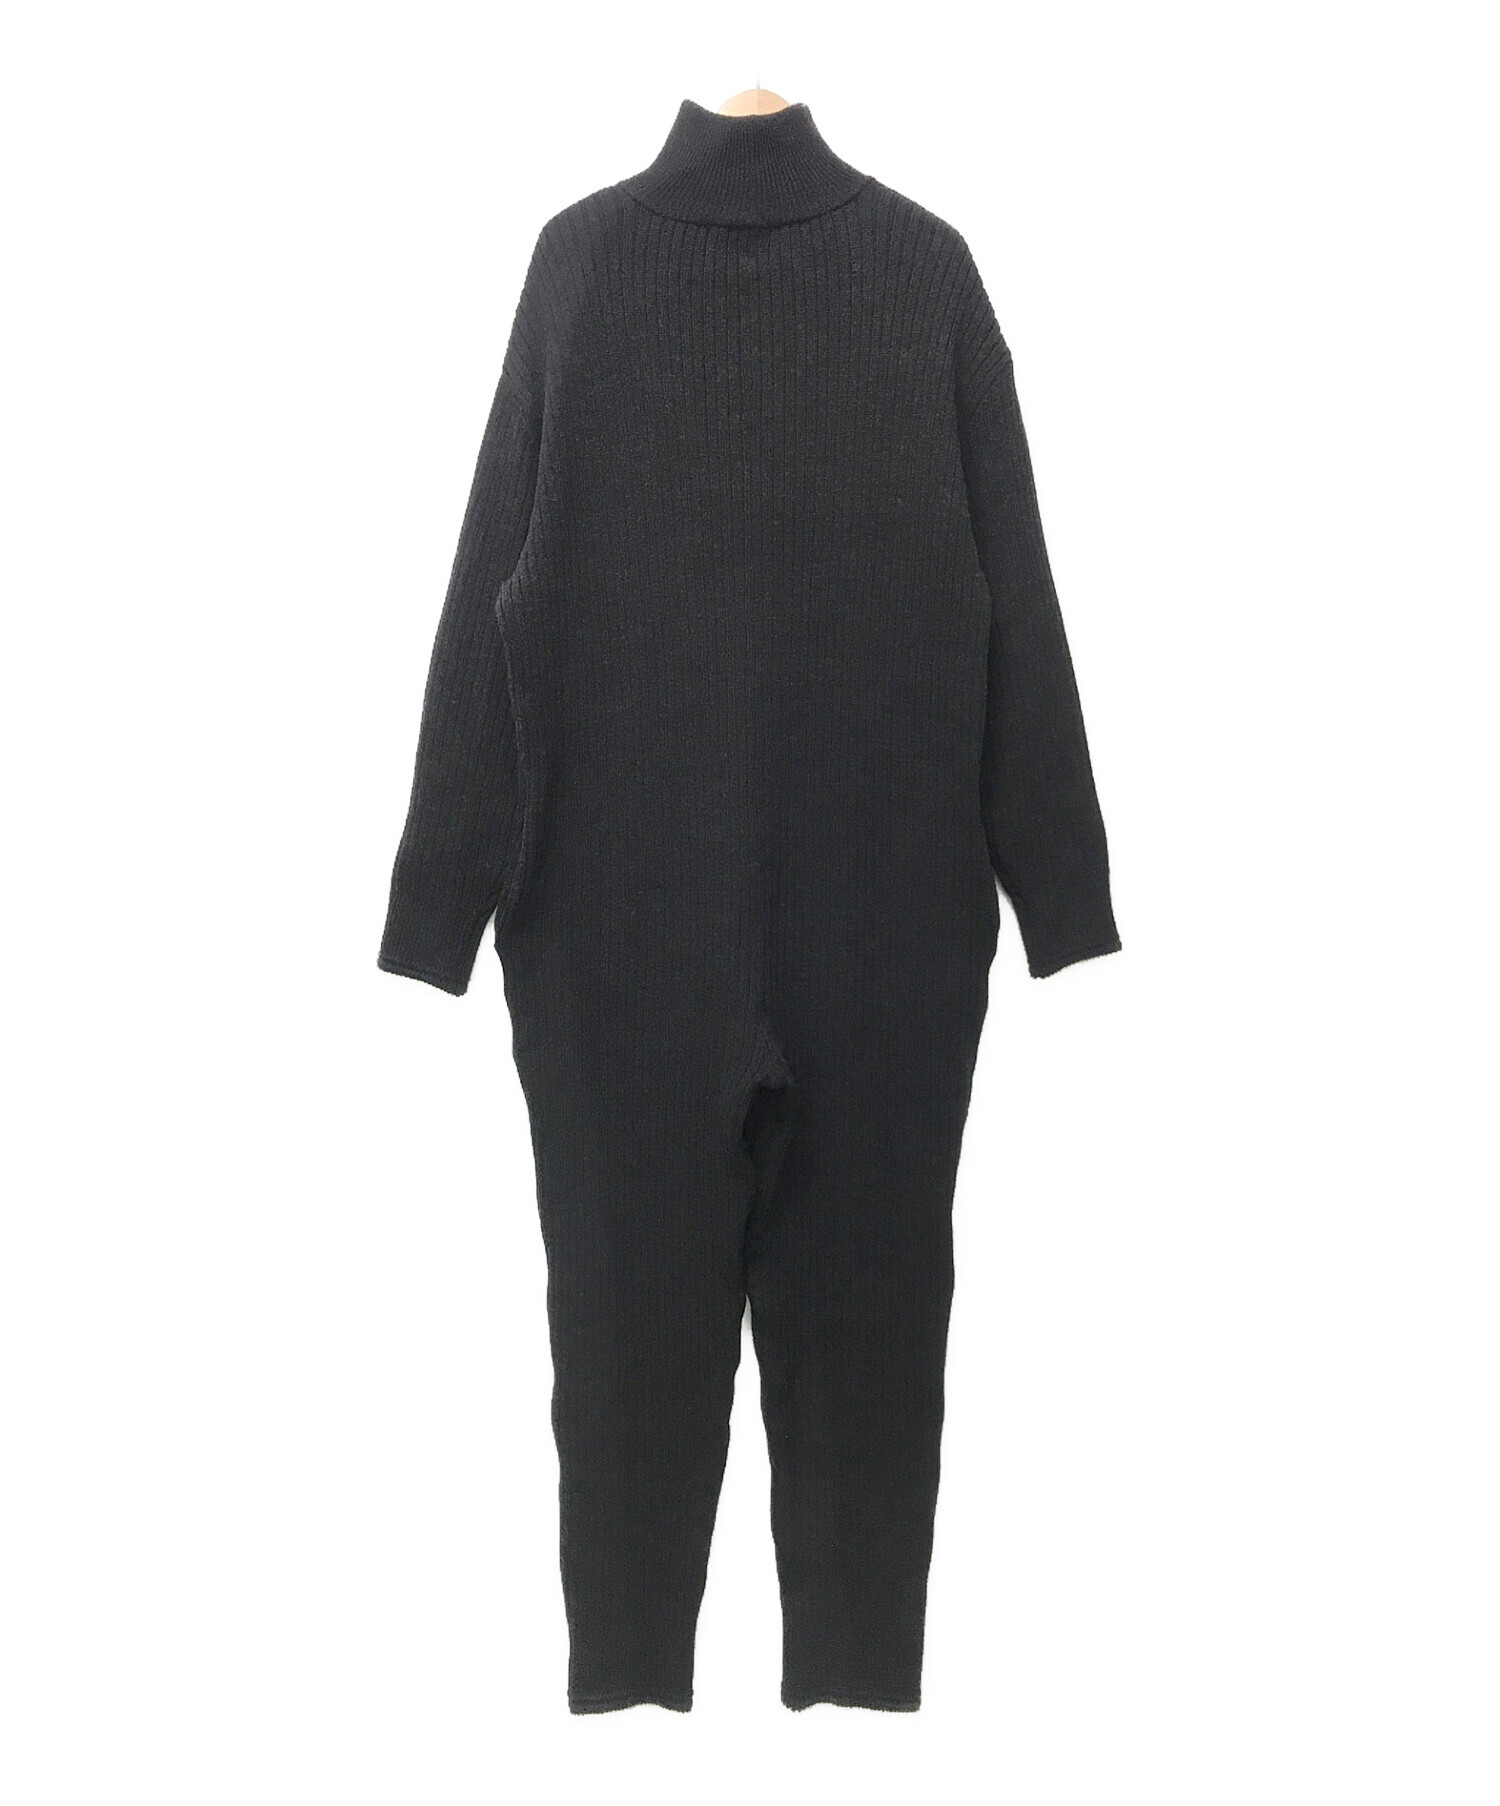 pelleq Twill cotton jump suit black ペレック - パンツ